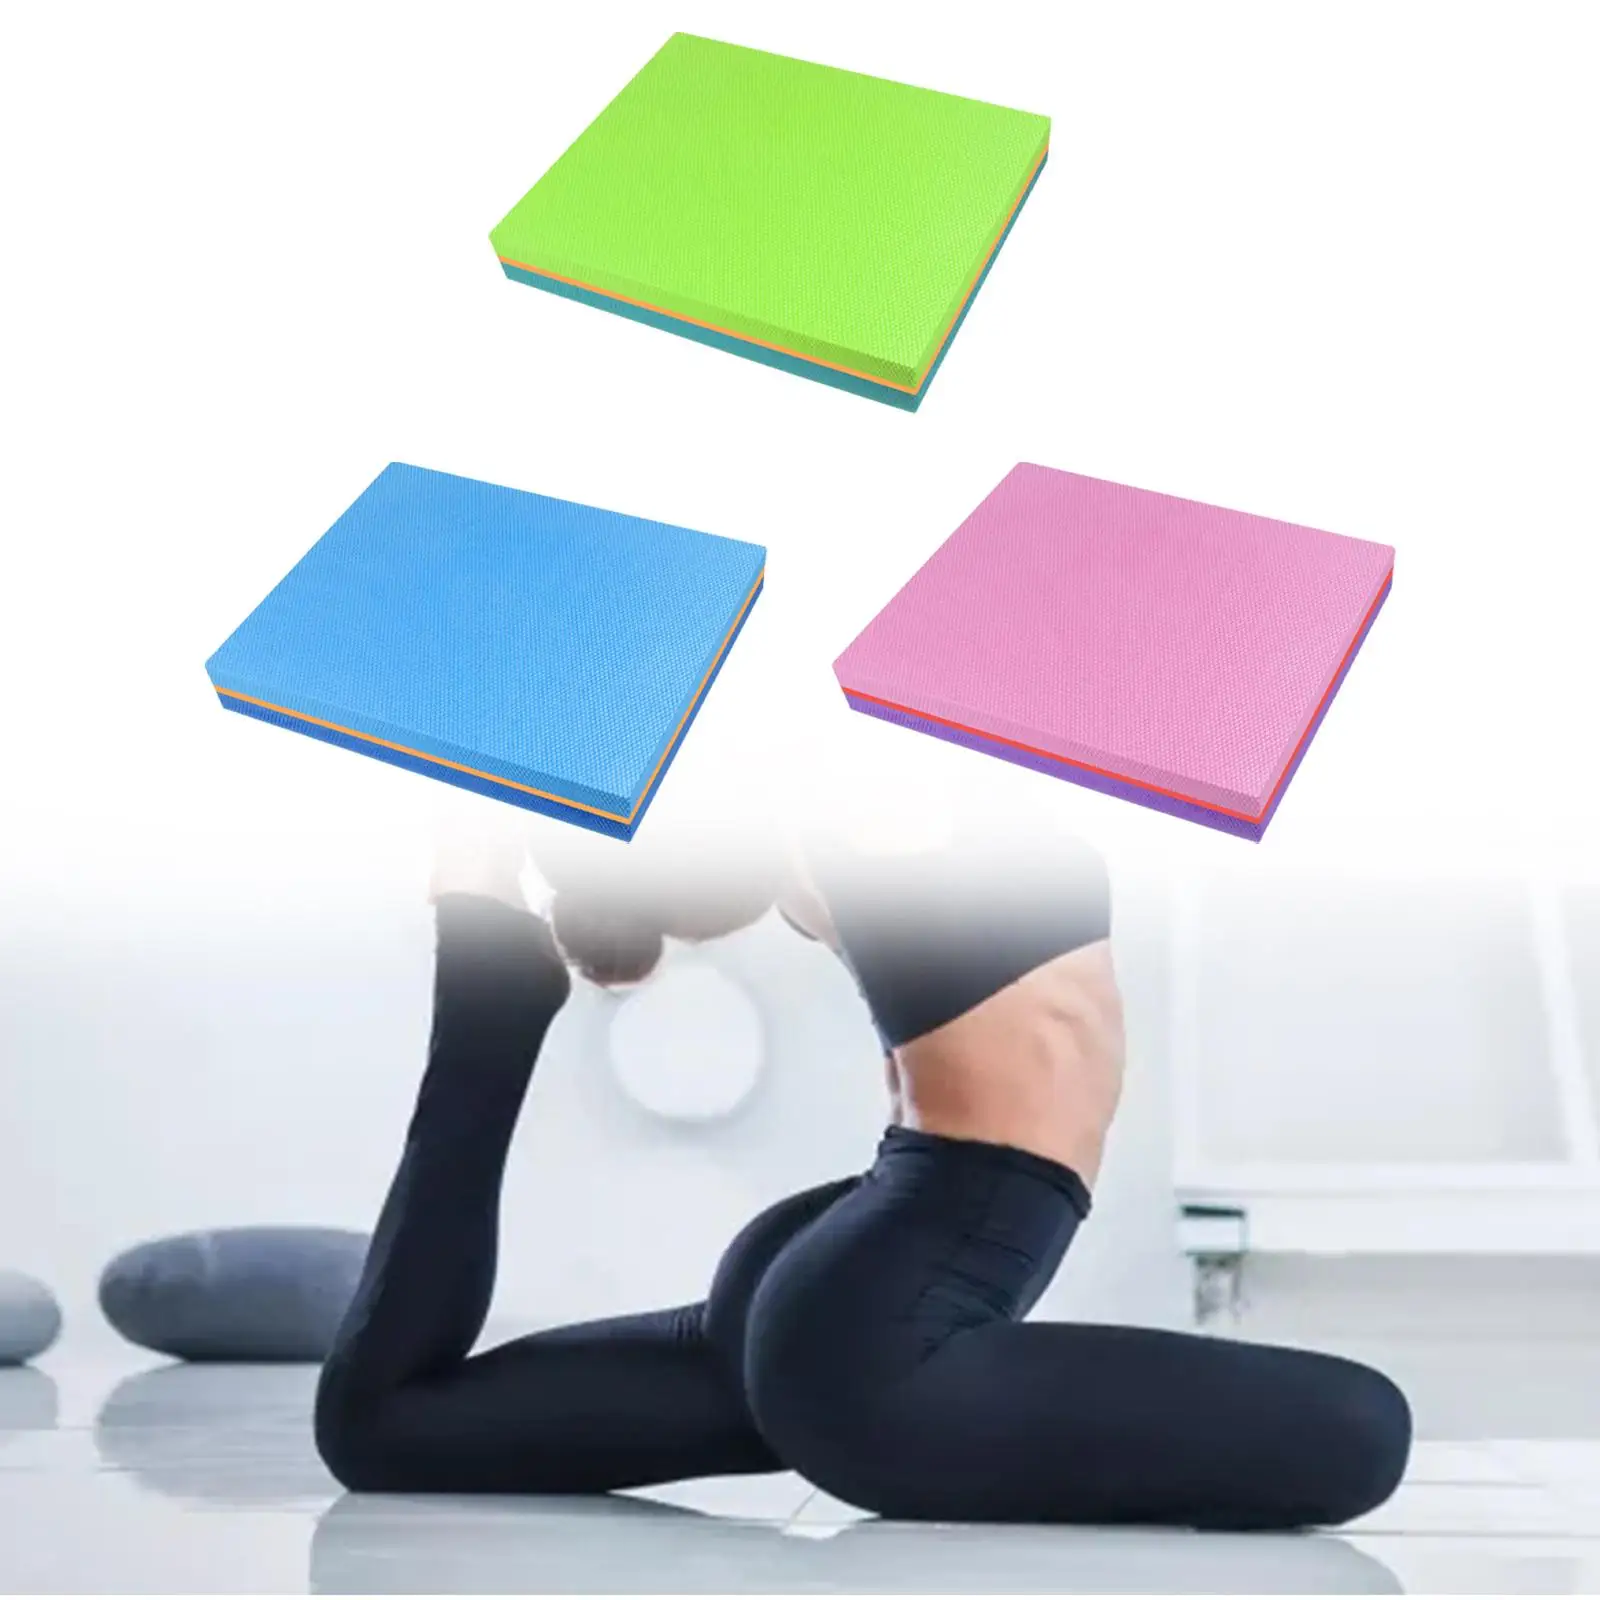 Exercise Balance Pad Fitness Trainer Yoga Mat for Rehabilitation Meditation Strength Stability Training Pilates Balancing